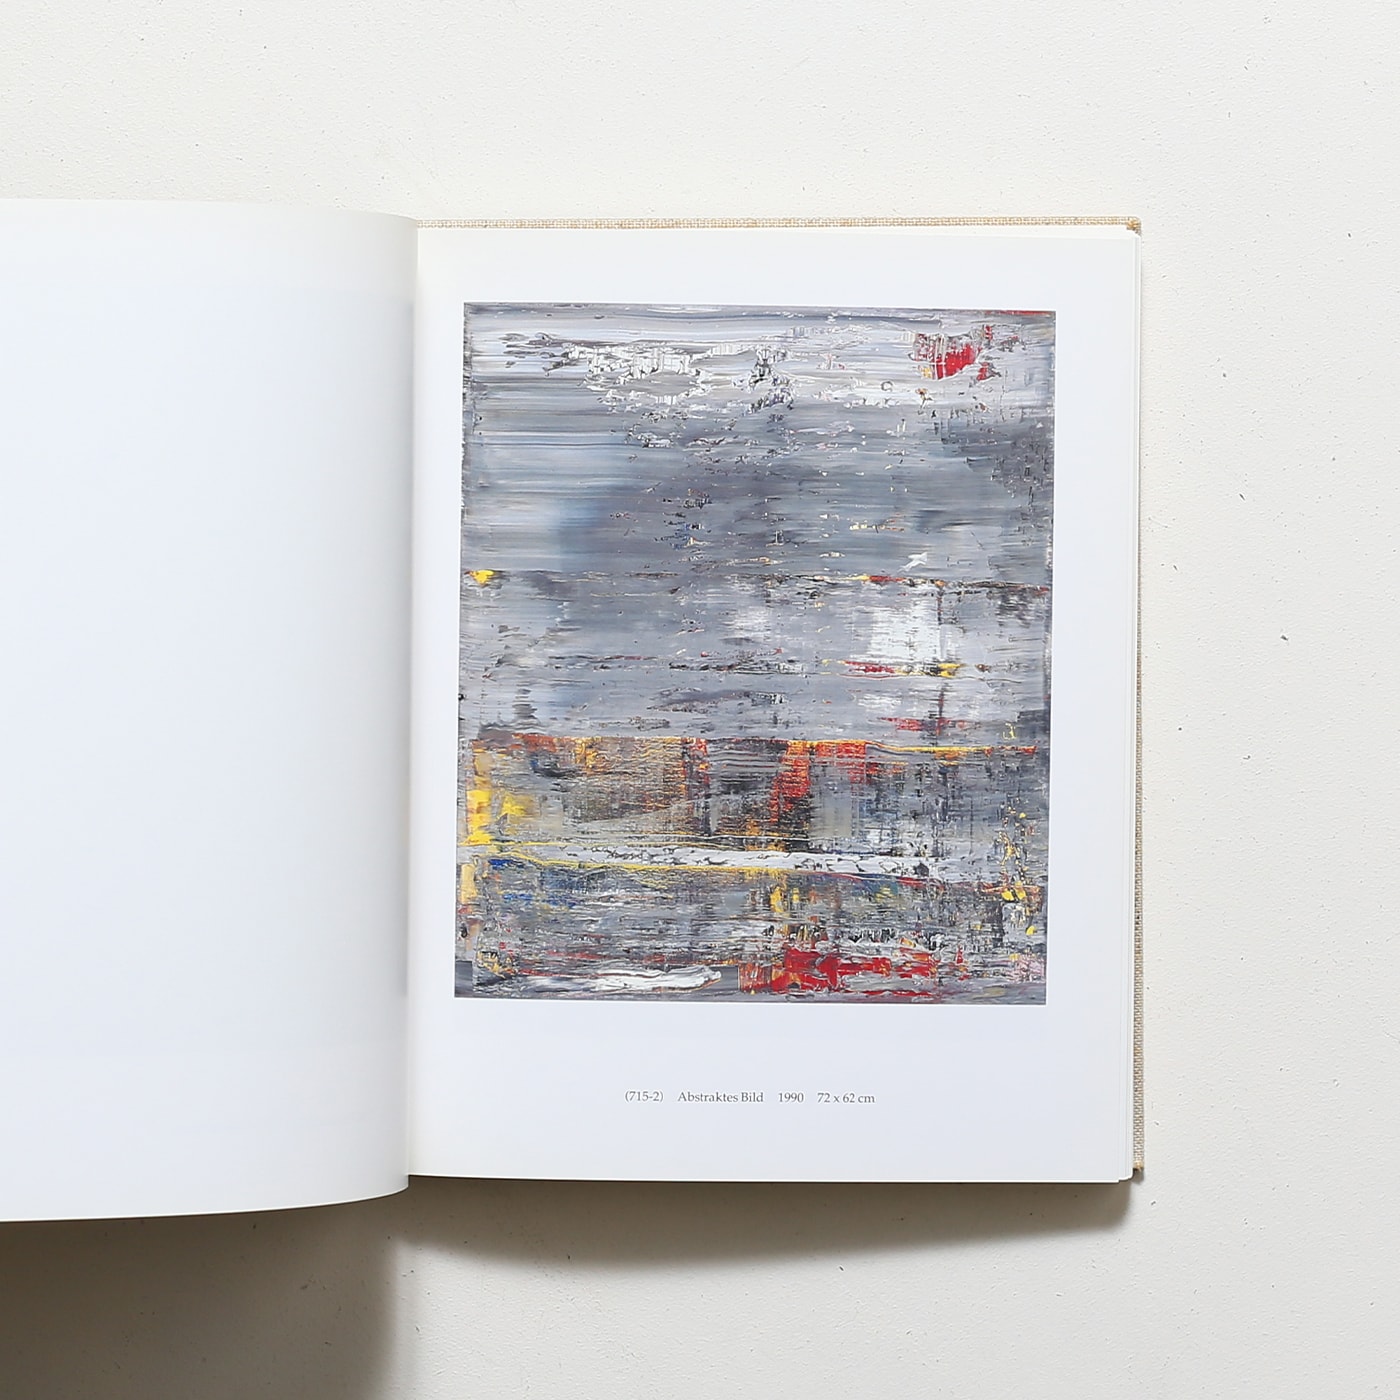 Gerhard Richter: 100 Pictures